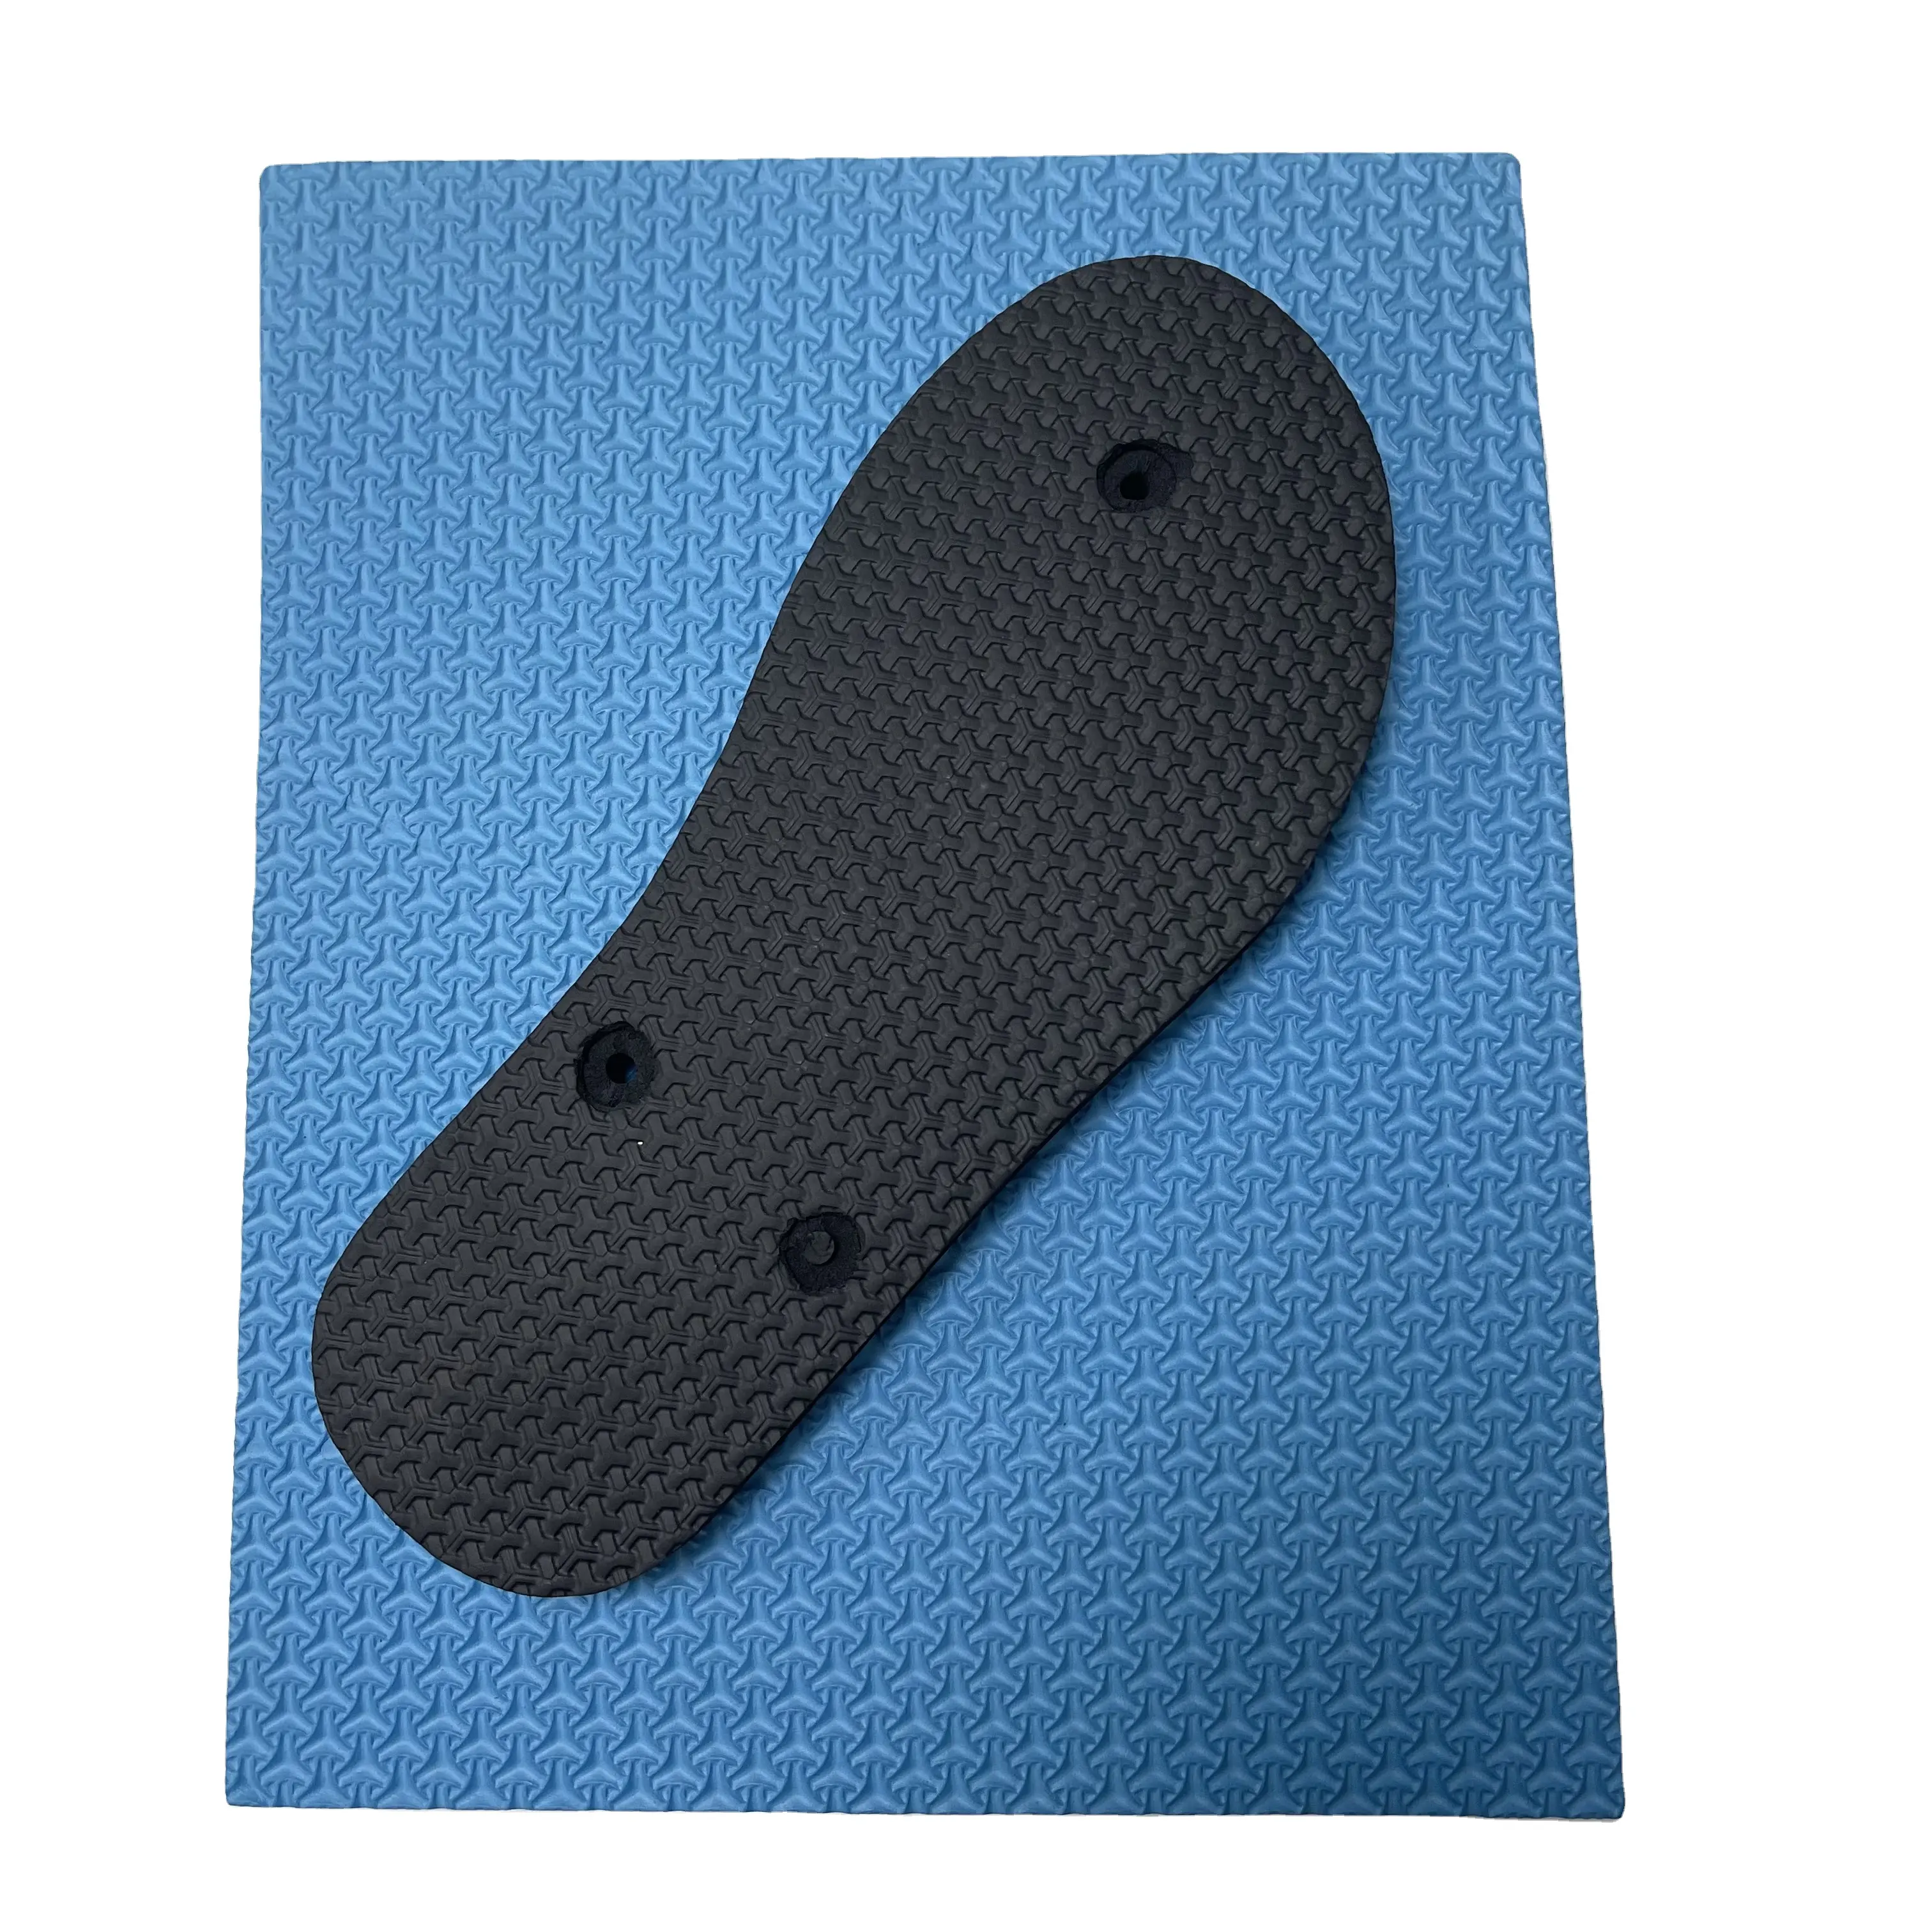 Custom Flip Flop Soles EVA foam rubber material soles for shoe soles slippers flip flop sandals making